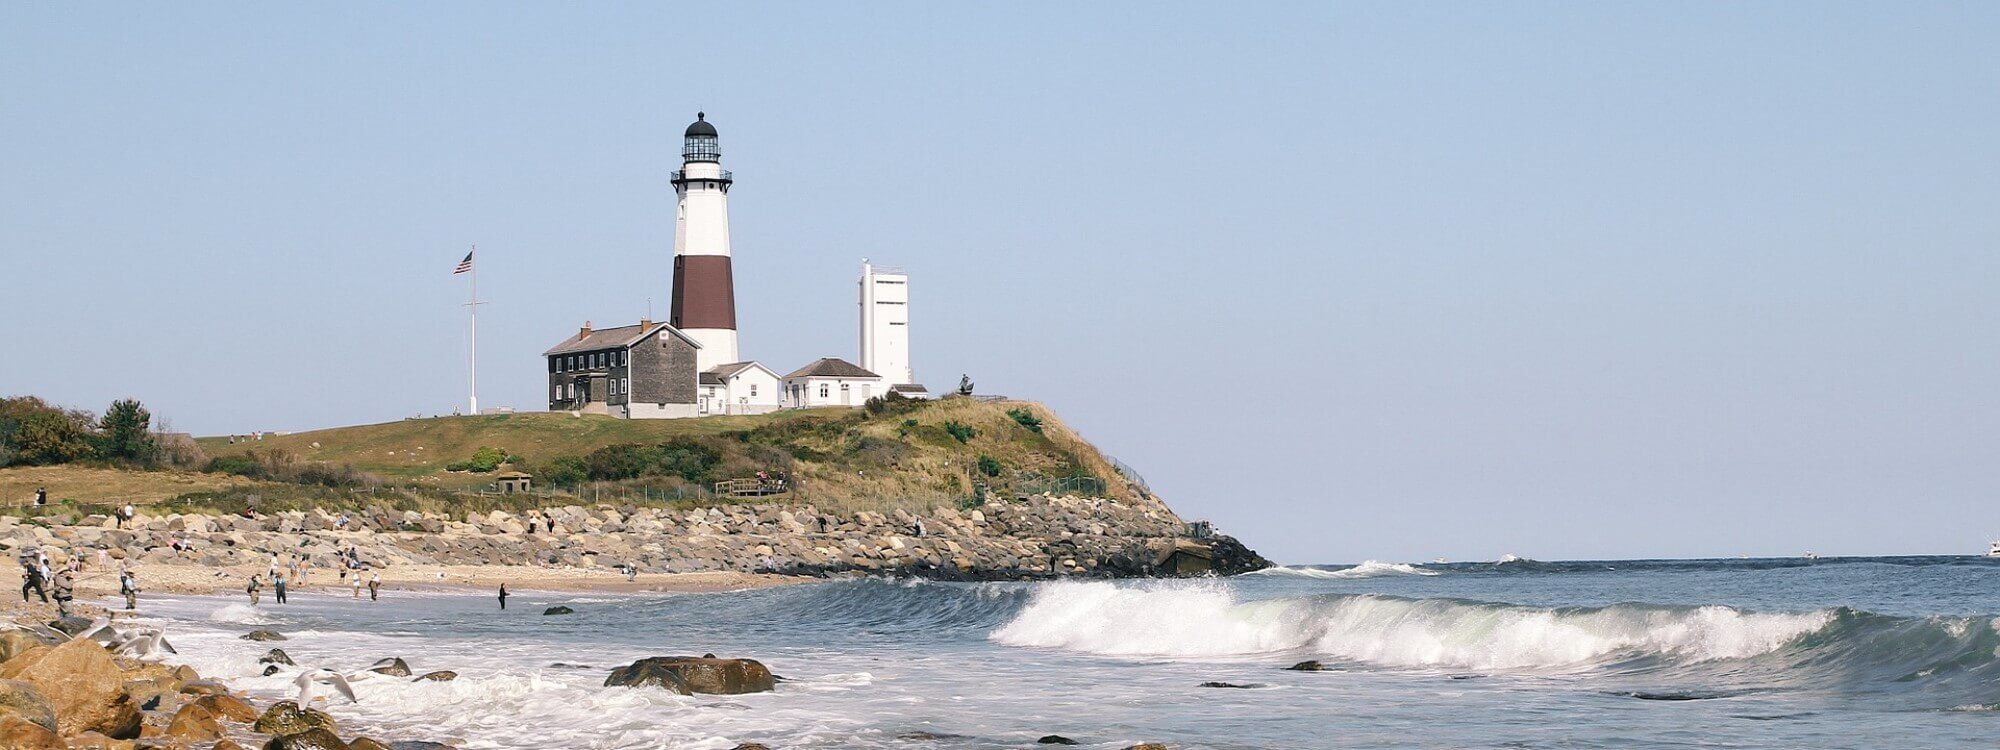 Lighthouse on the Maine coast